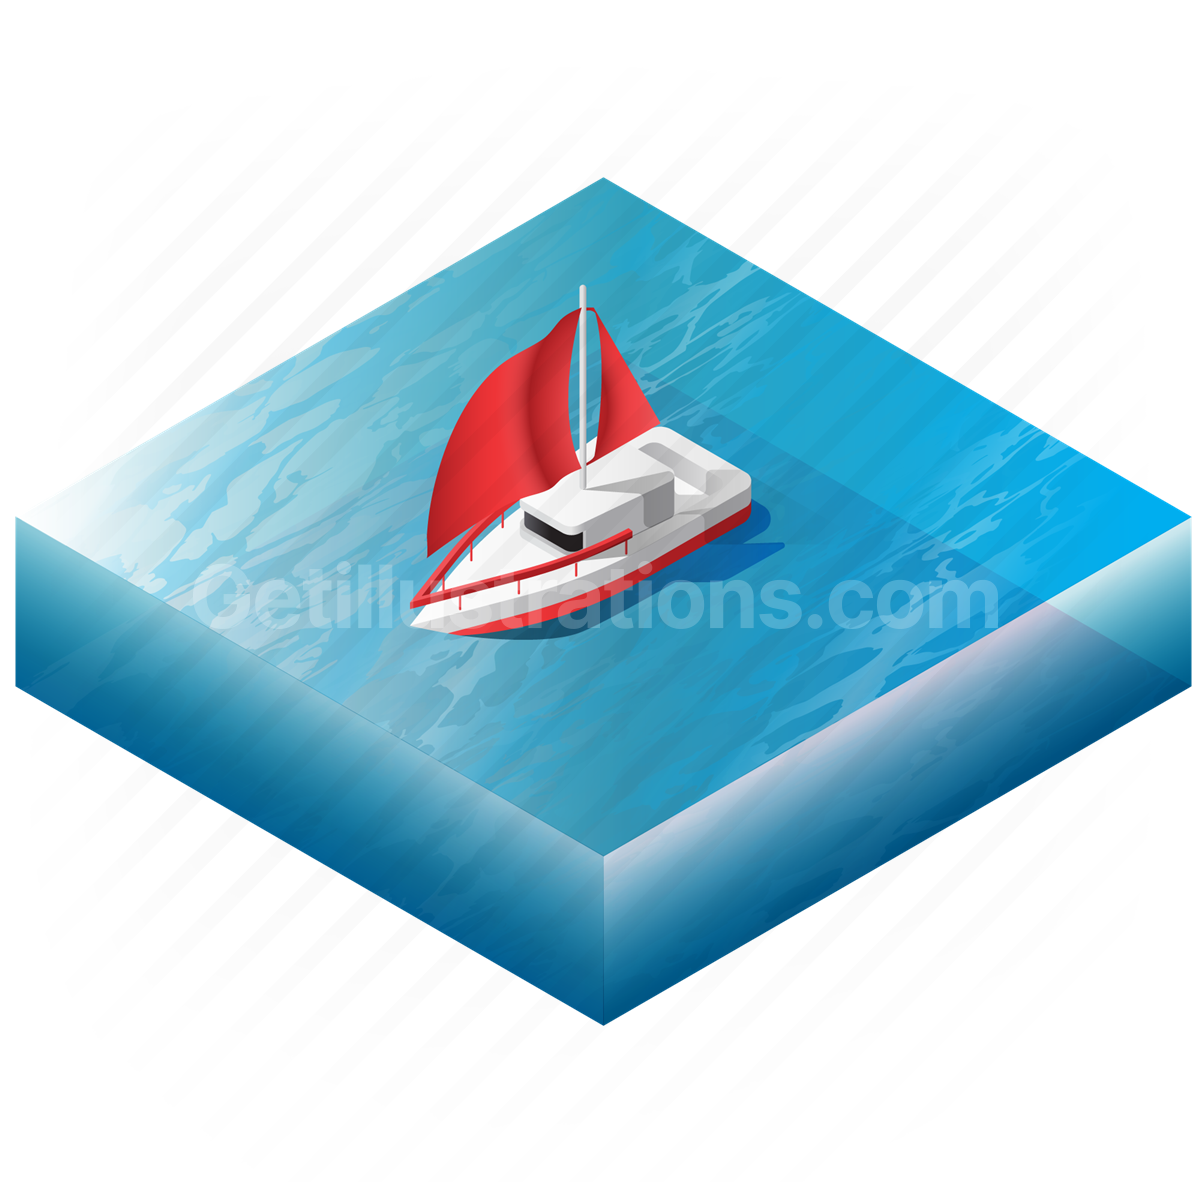 water, sea, ocean, boat, sail, transport, vehicle